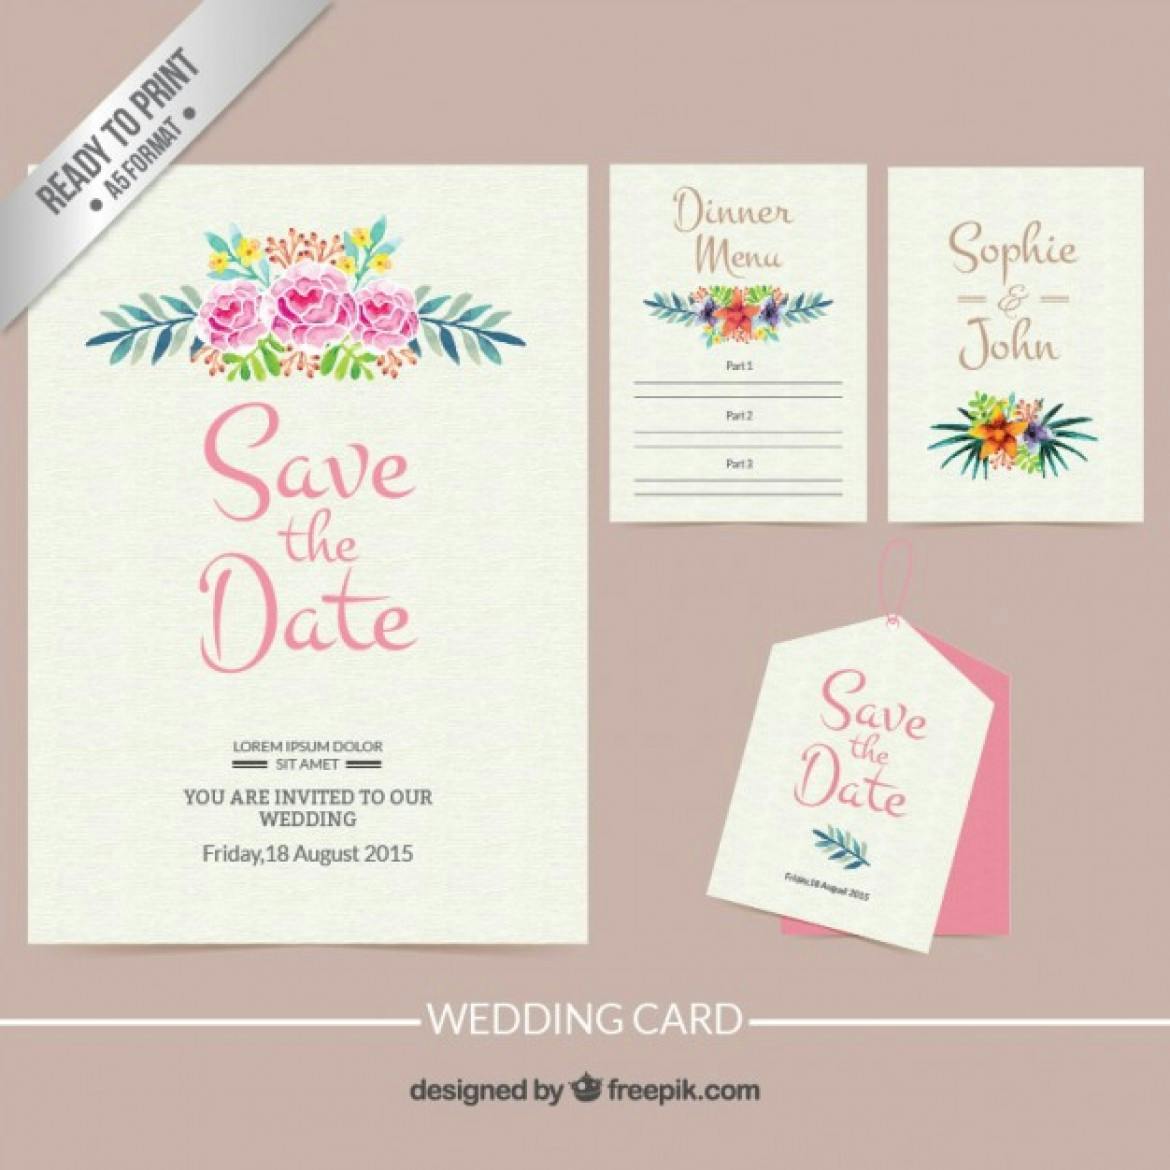 wpid-hand-painted-floral-wedding-invitation_23-2147509740-1170x1170